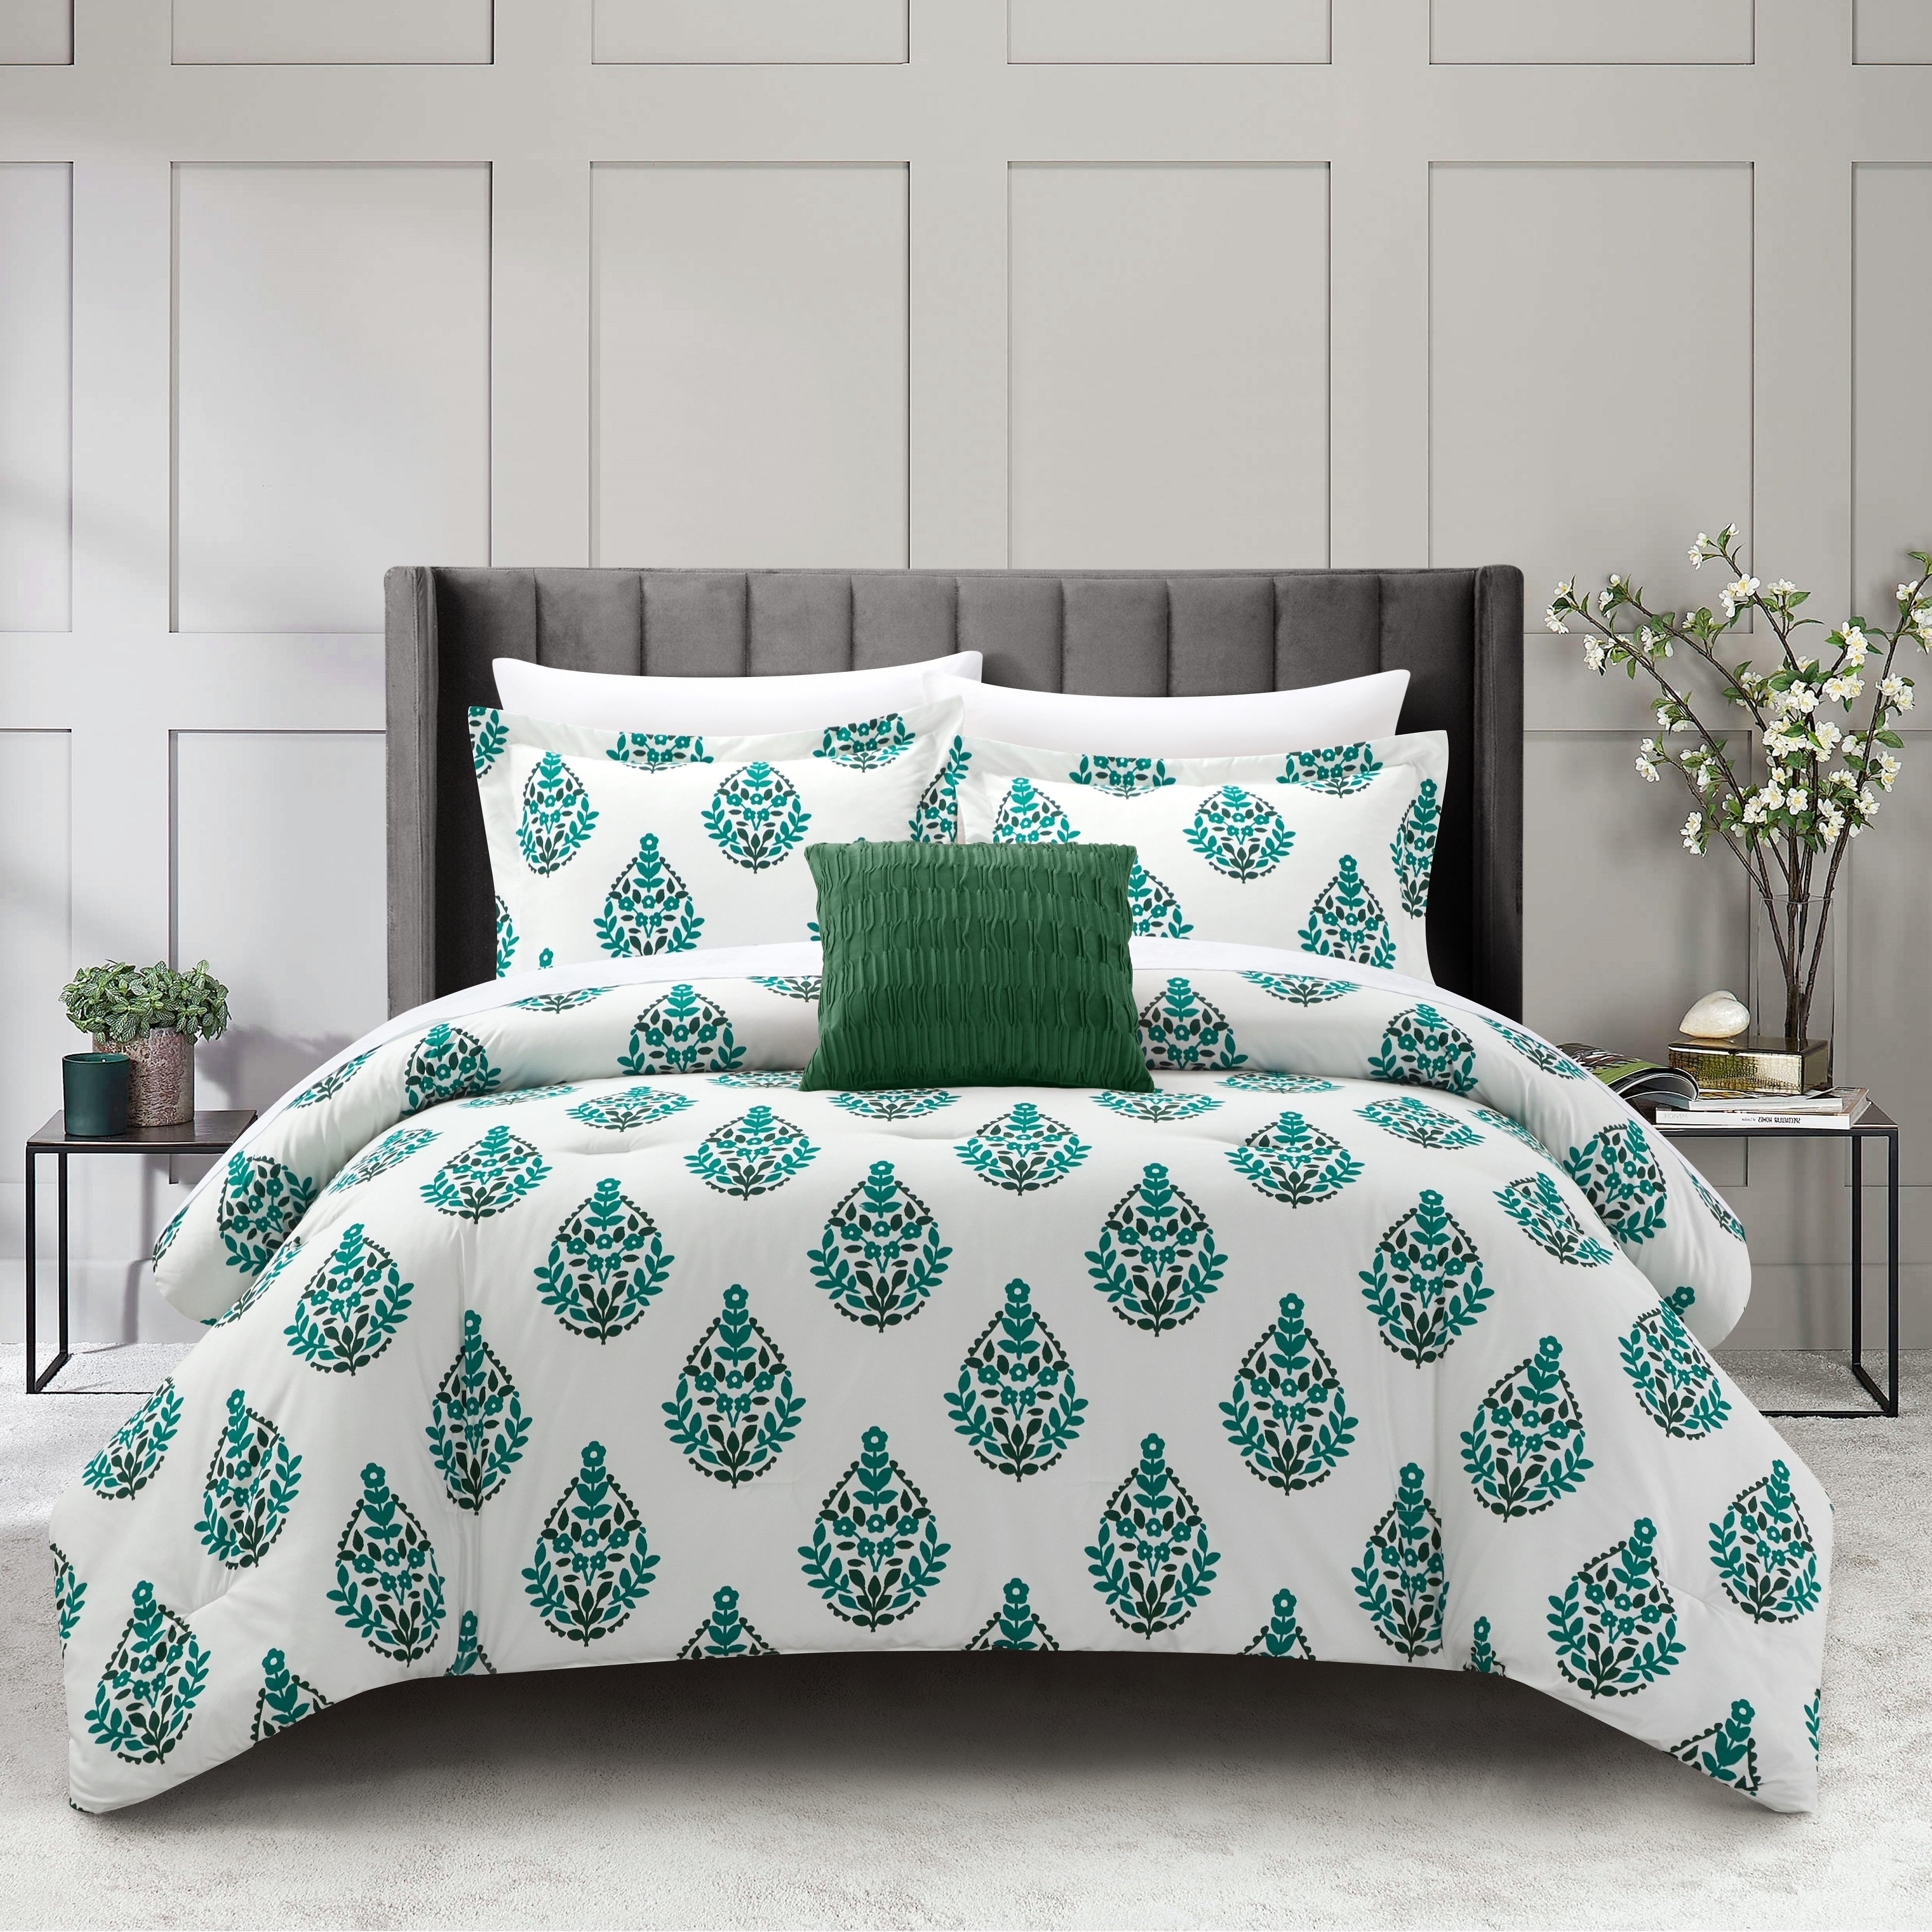 Clairessa 4 Or 3 Piece Comforter Set Floral Medallion Print Design Bedding - Green, Twin - 3 Piece